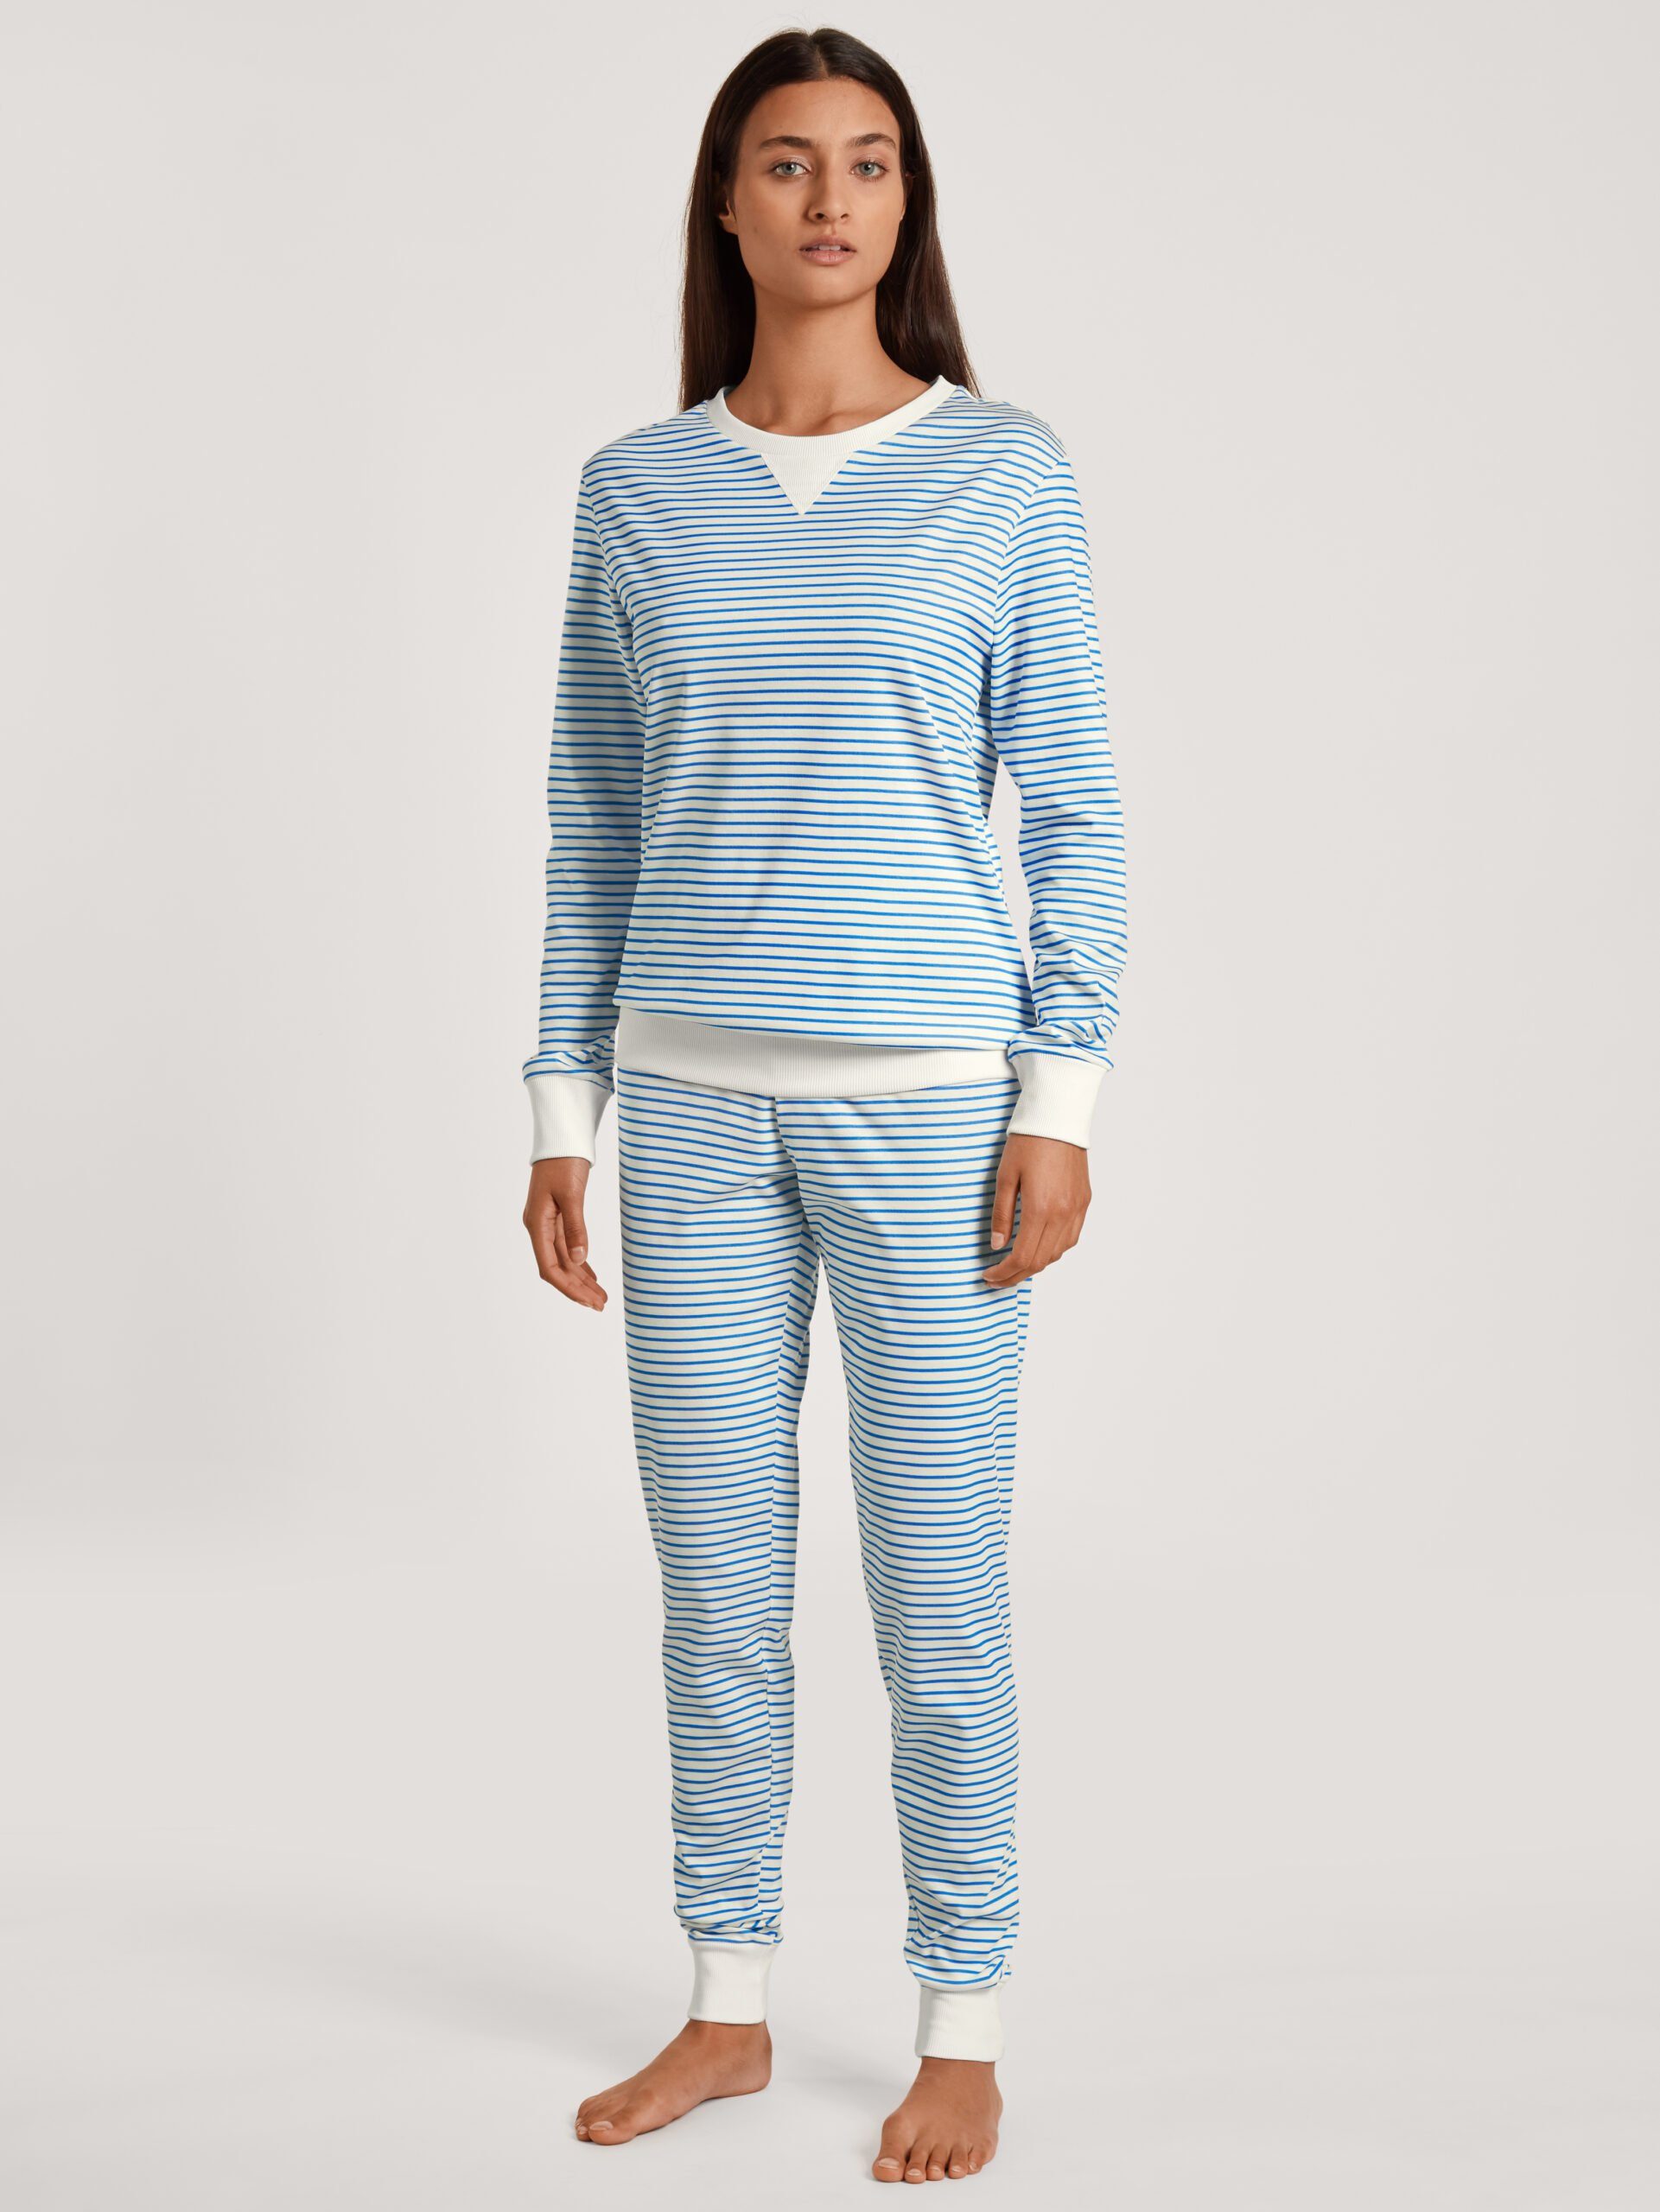 Damen azurit Bündchenpyjama 42454 1 CALIDA tlg., 1 Stück, (1 Calida Pyjama Stück) blue